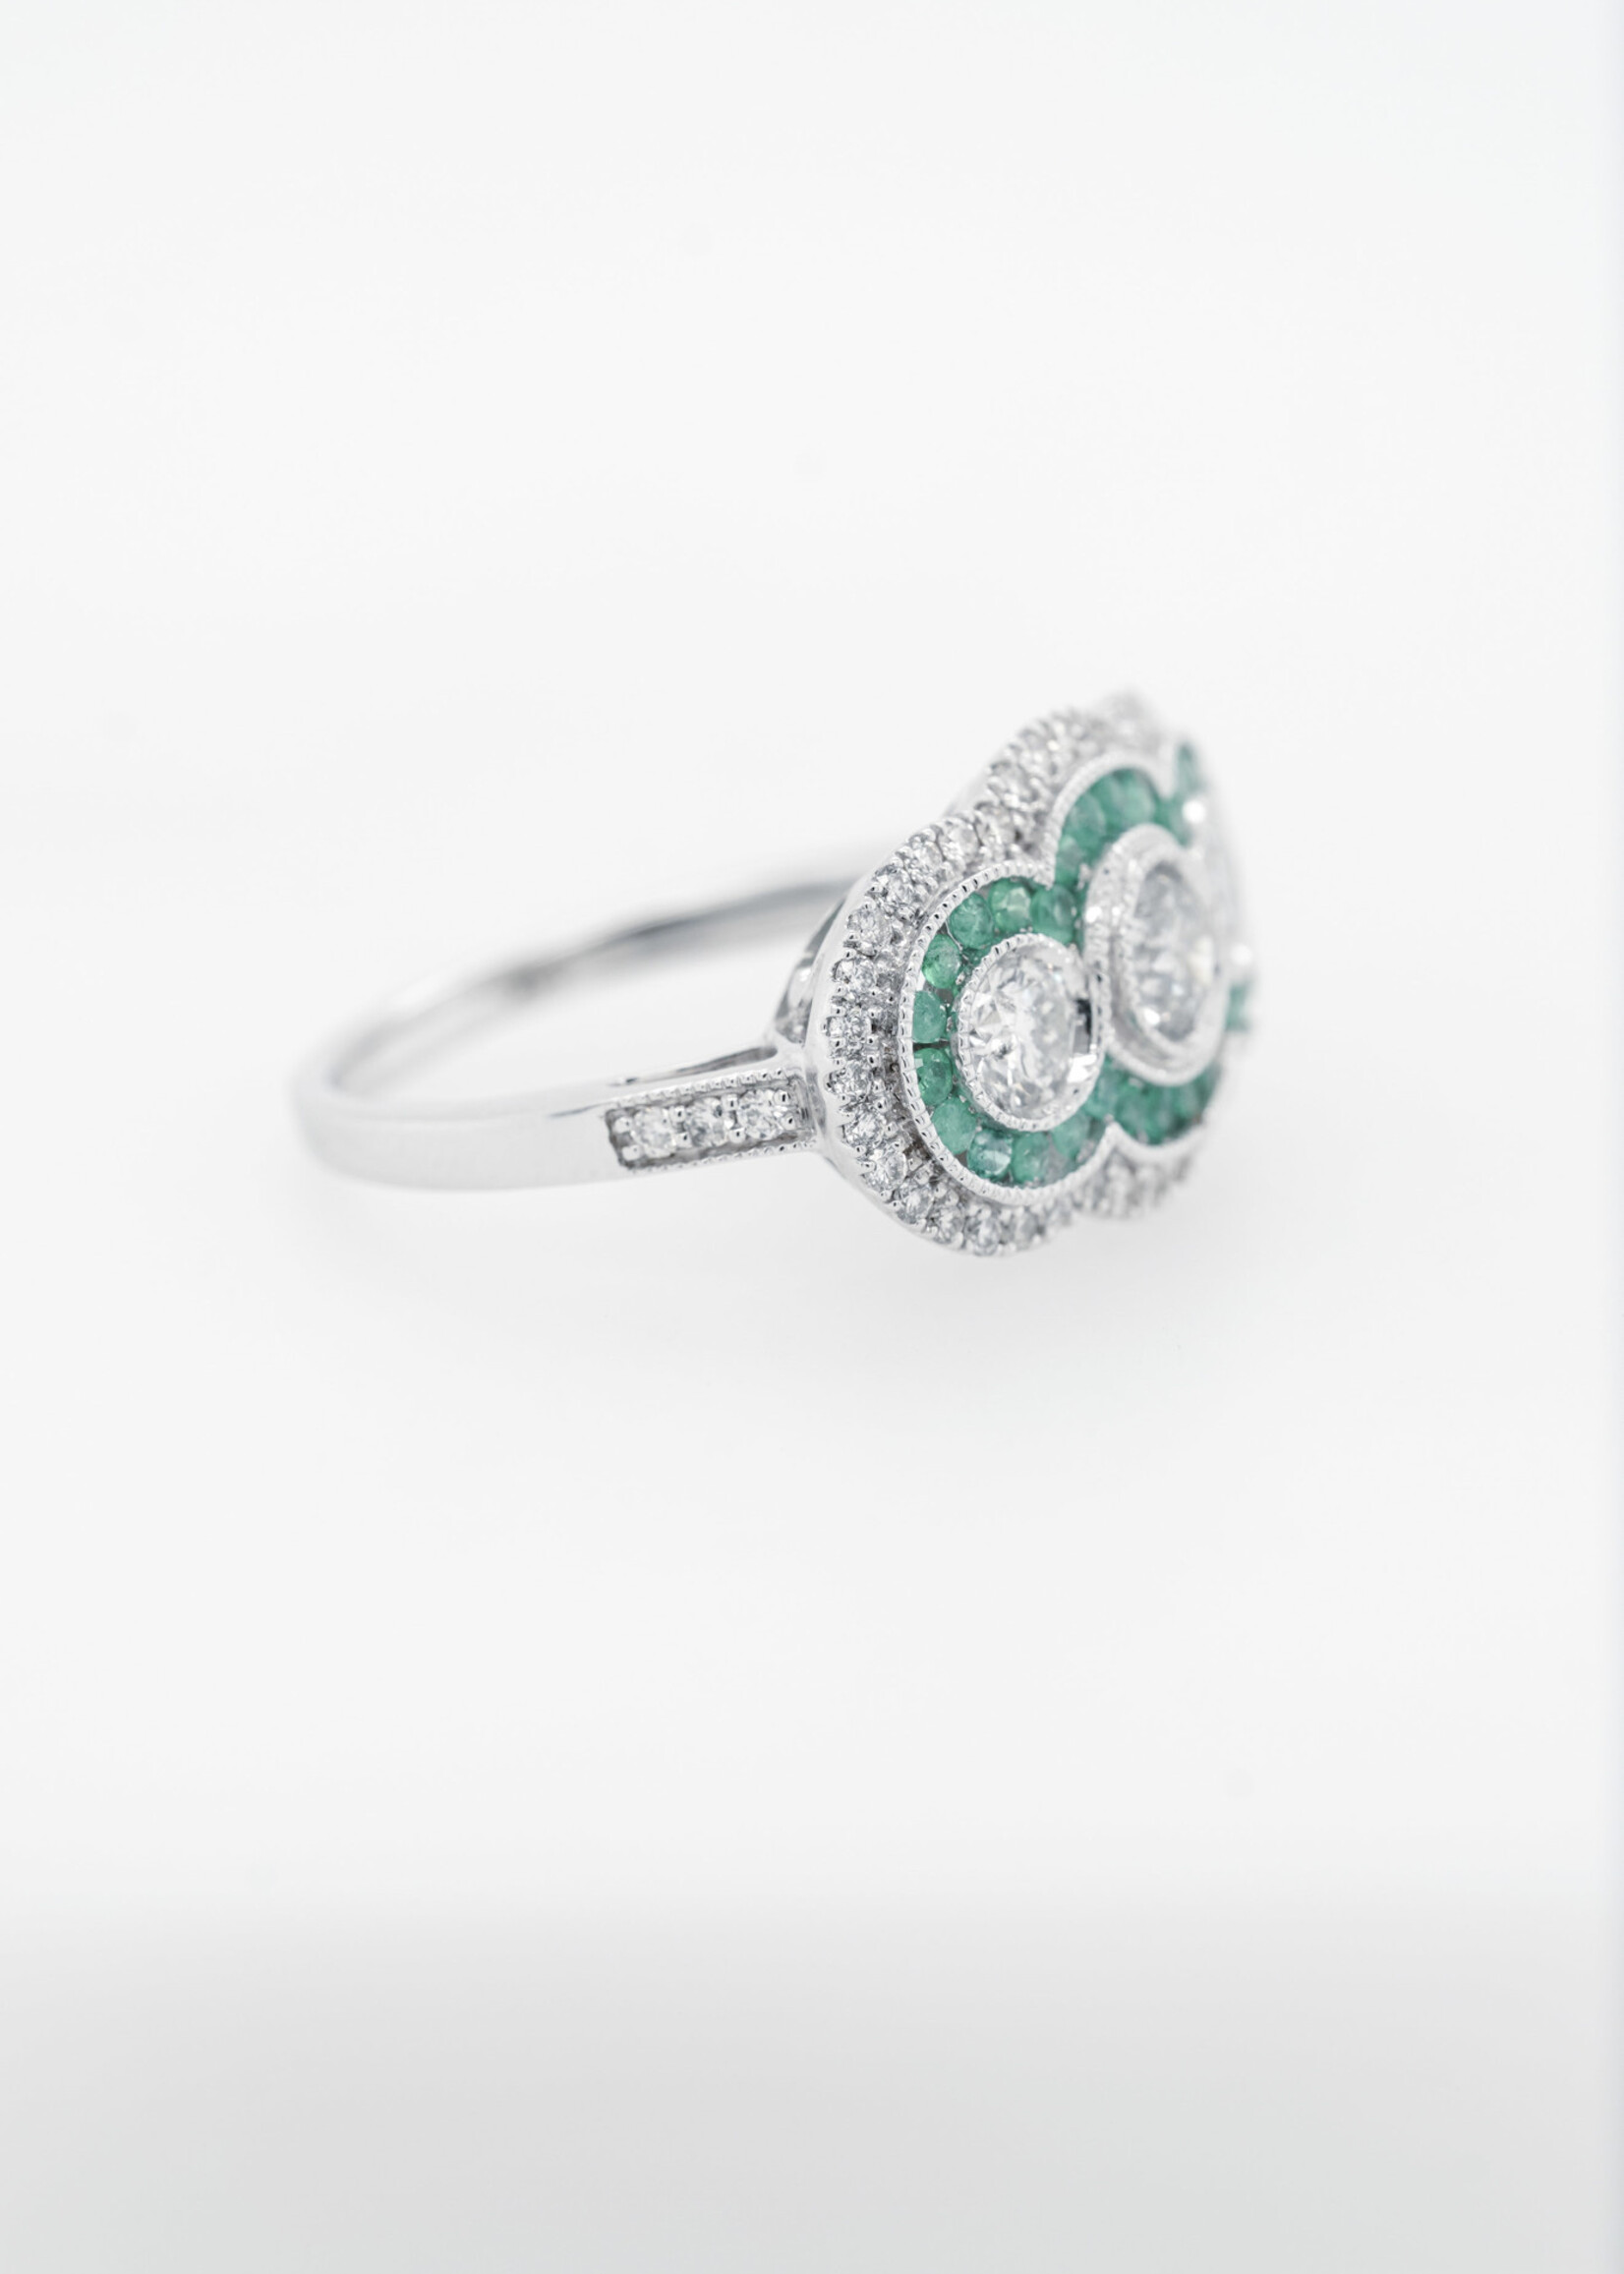 14KW 4.4g 1.13ctw Emerald & Diamond Vintage Inspired Ring (size 7.25)